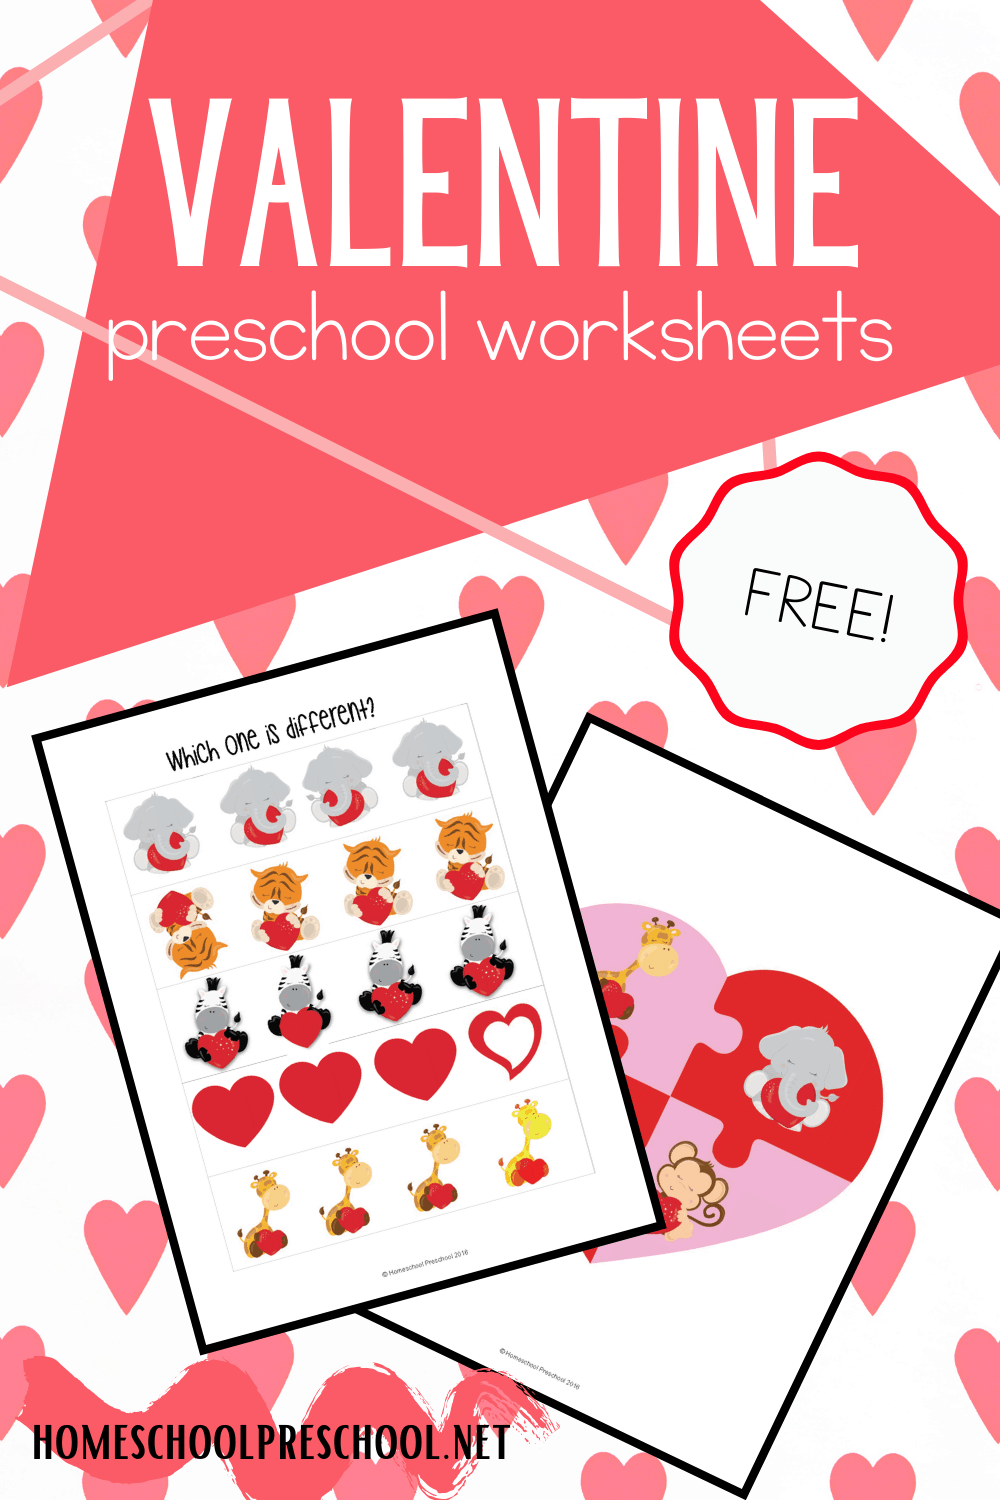 Preschool Valentine’s Day Worksheets